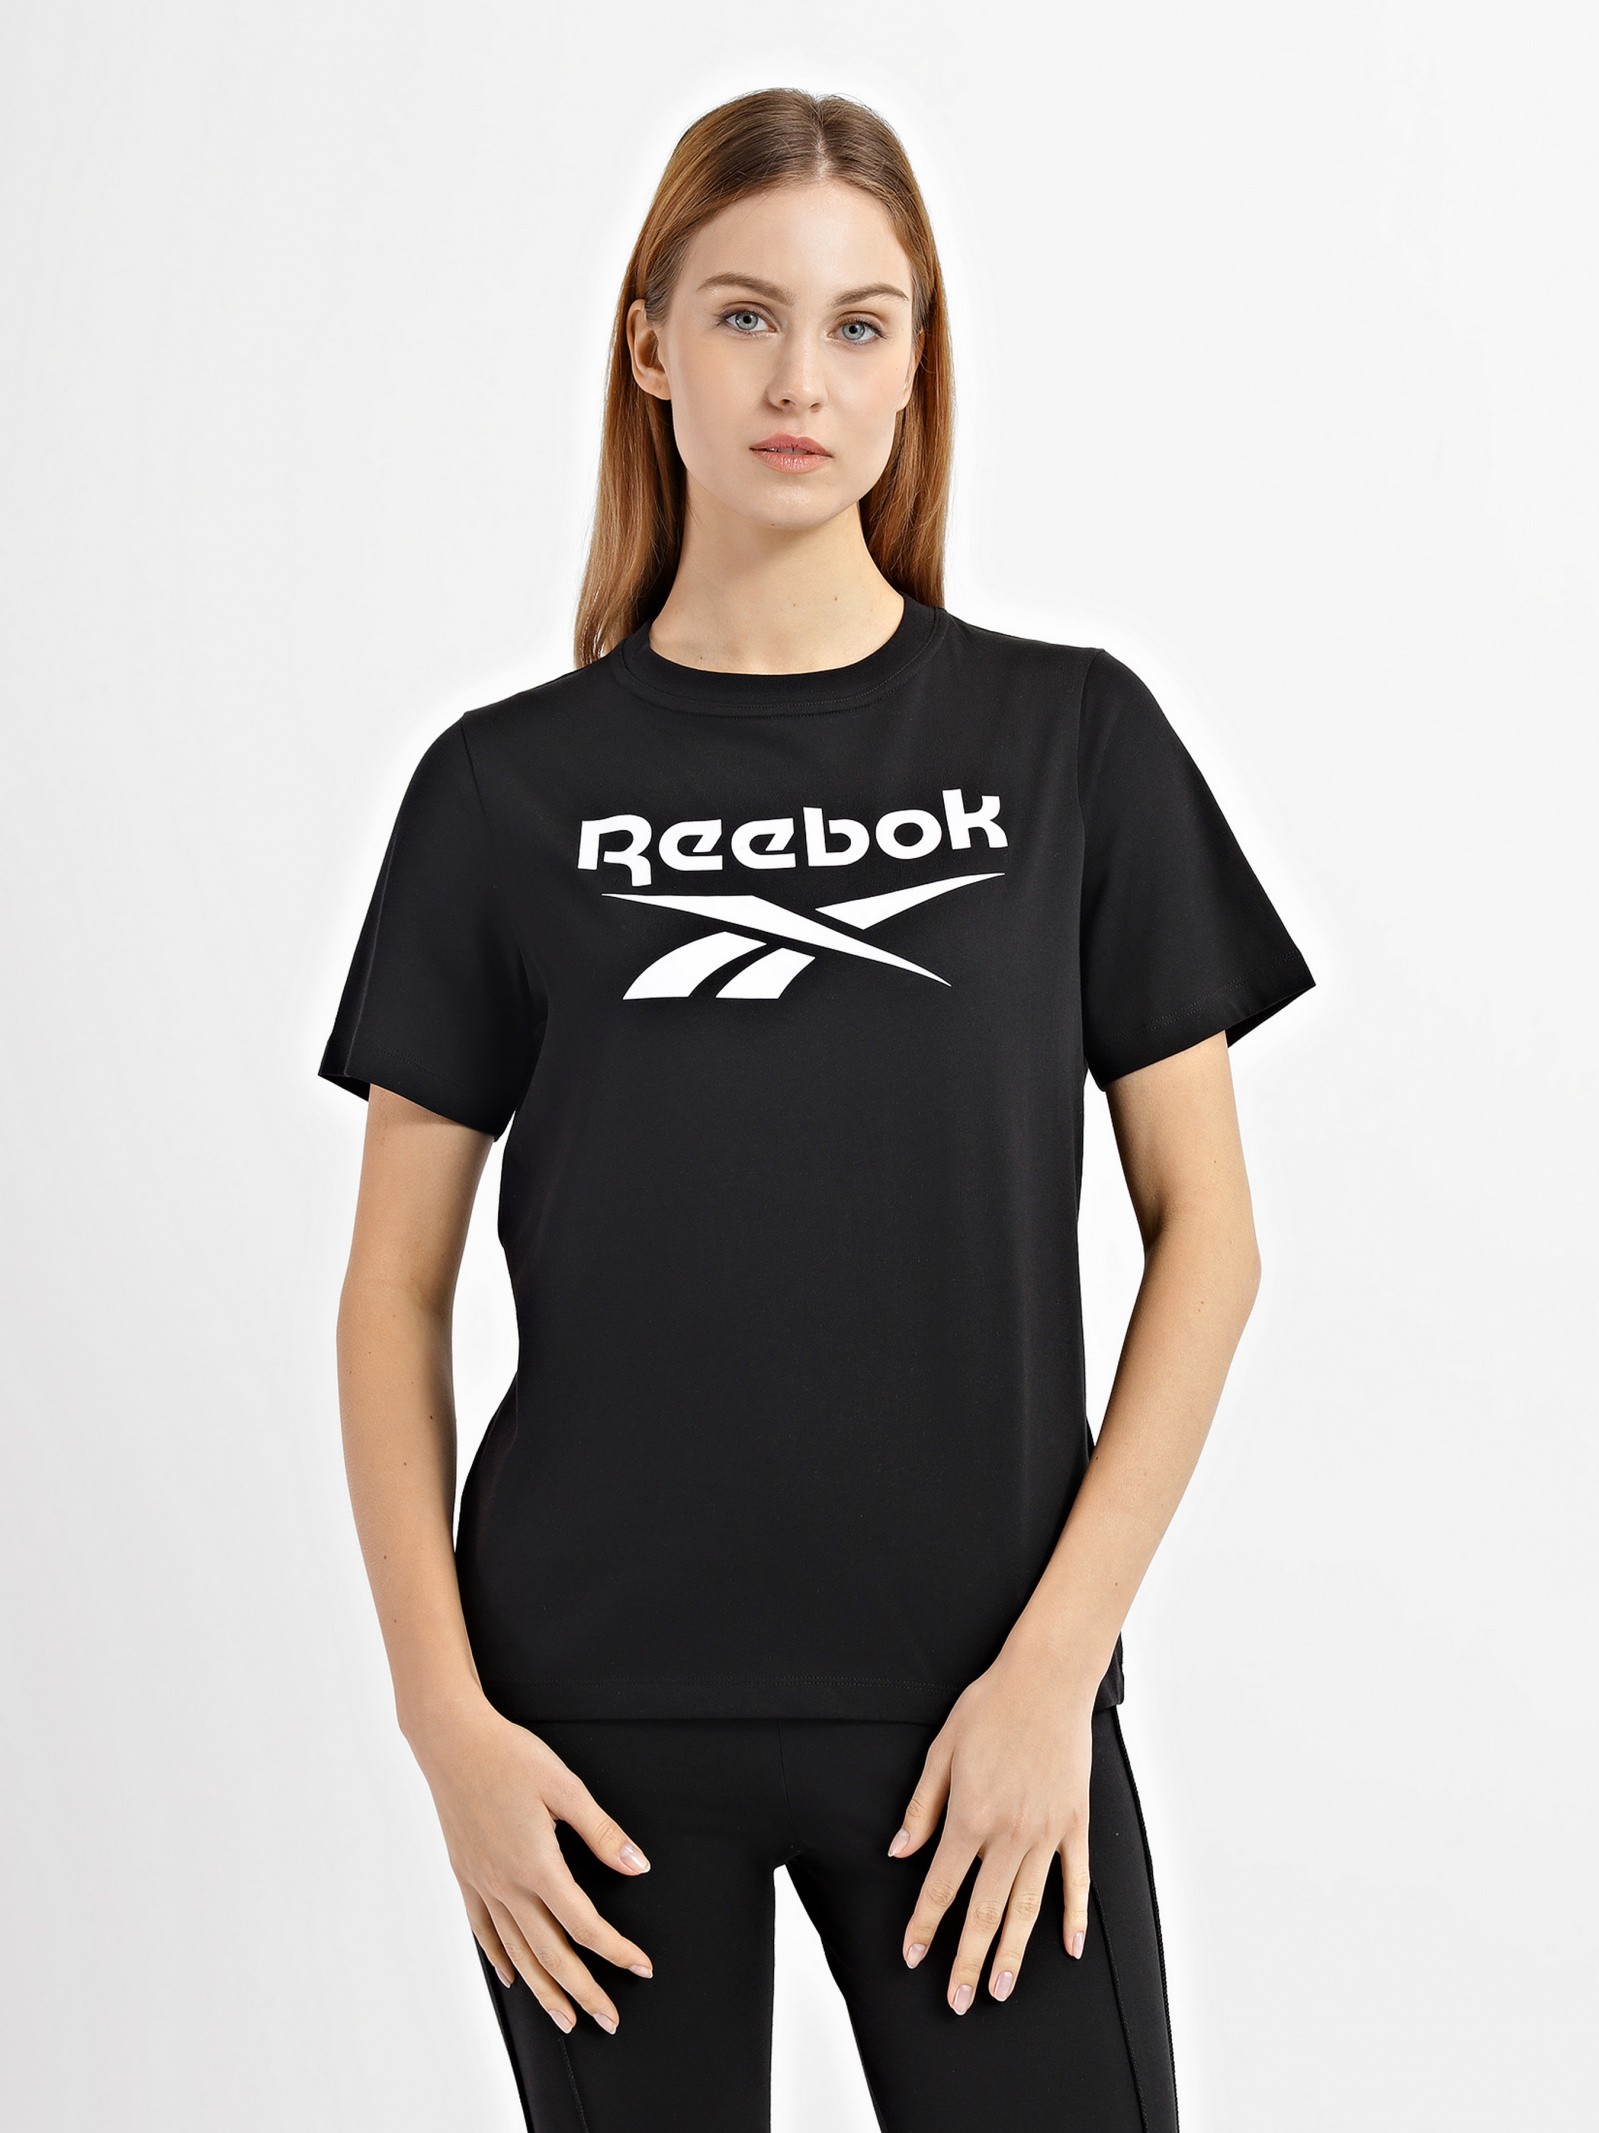 Reebok Ri Ble Tee Women's T-Shirt HB2271